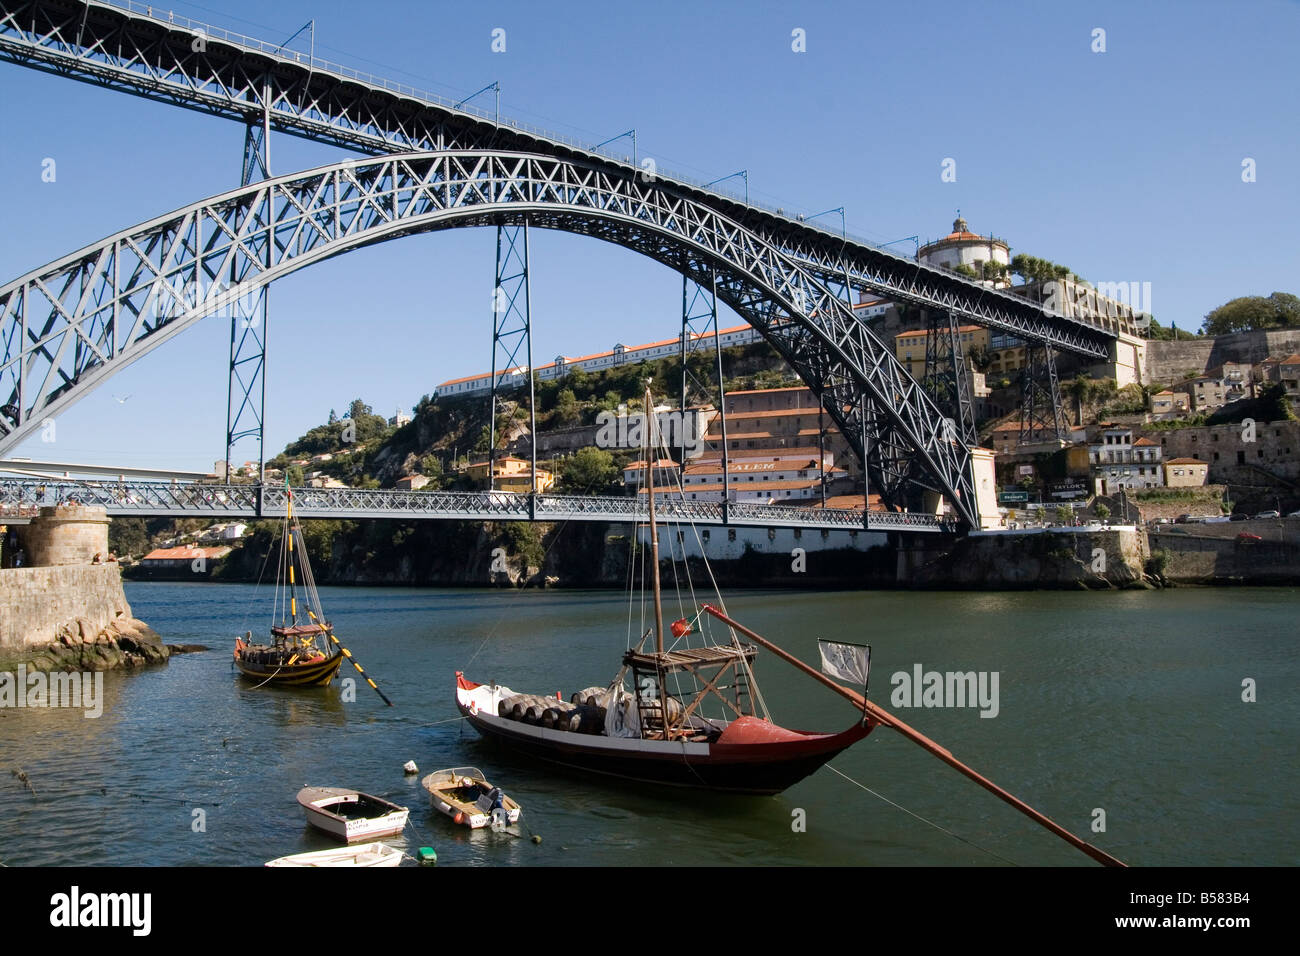 Dom Luis 1 bridge over the River Douro, Cais de Ribeira waterfront, with Vila Nova de Gaia opposite, Oporto, Portugal, Europe Stock Photo